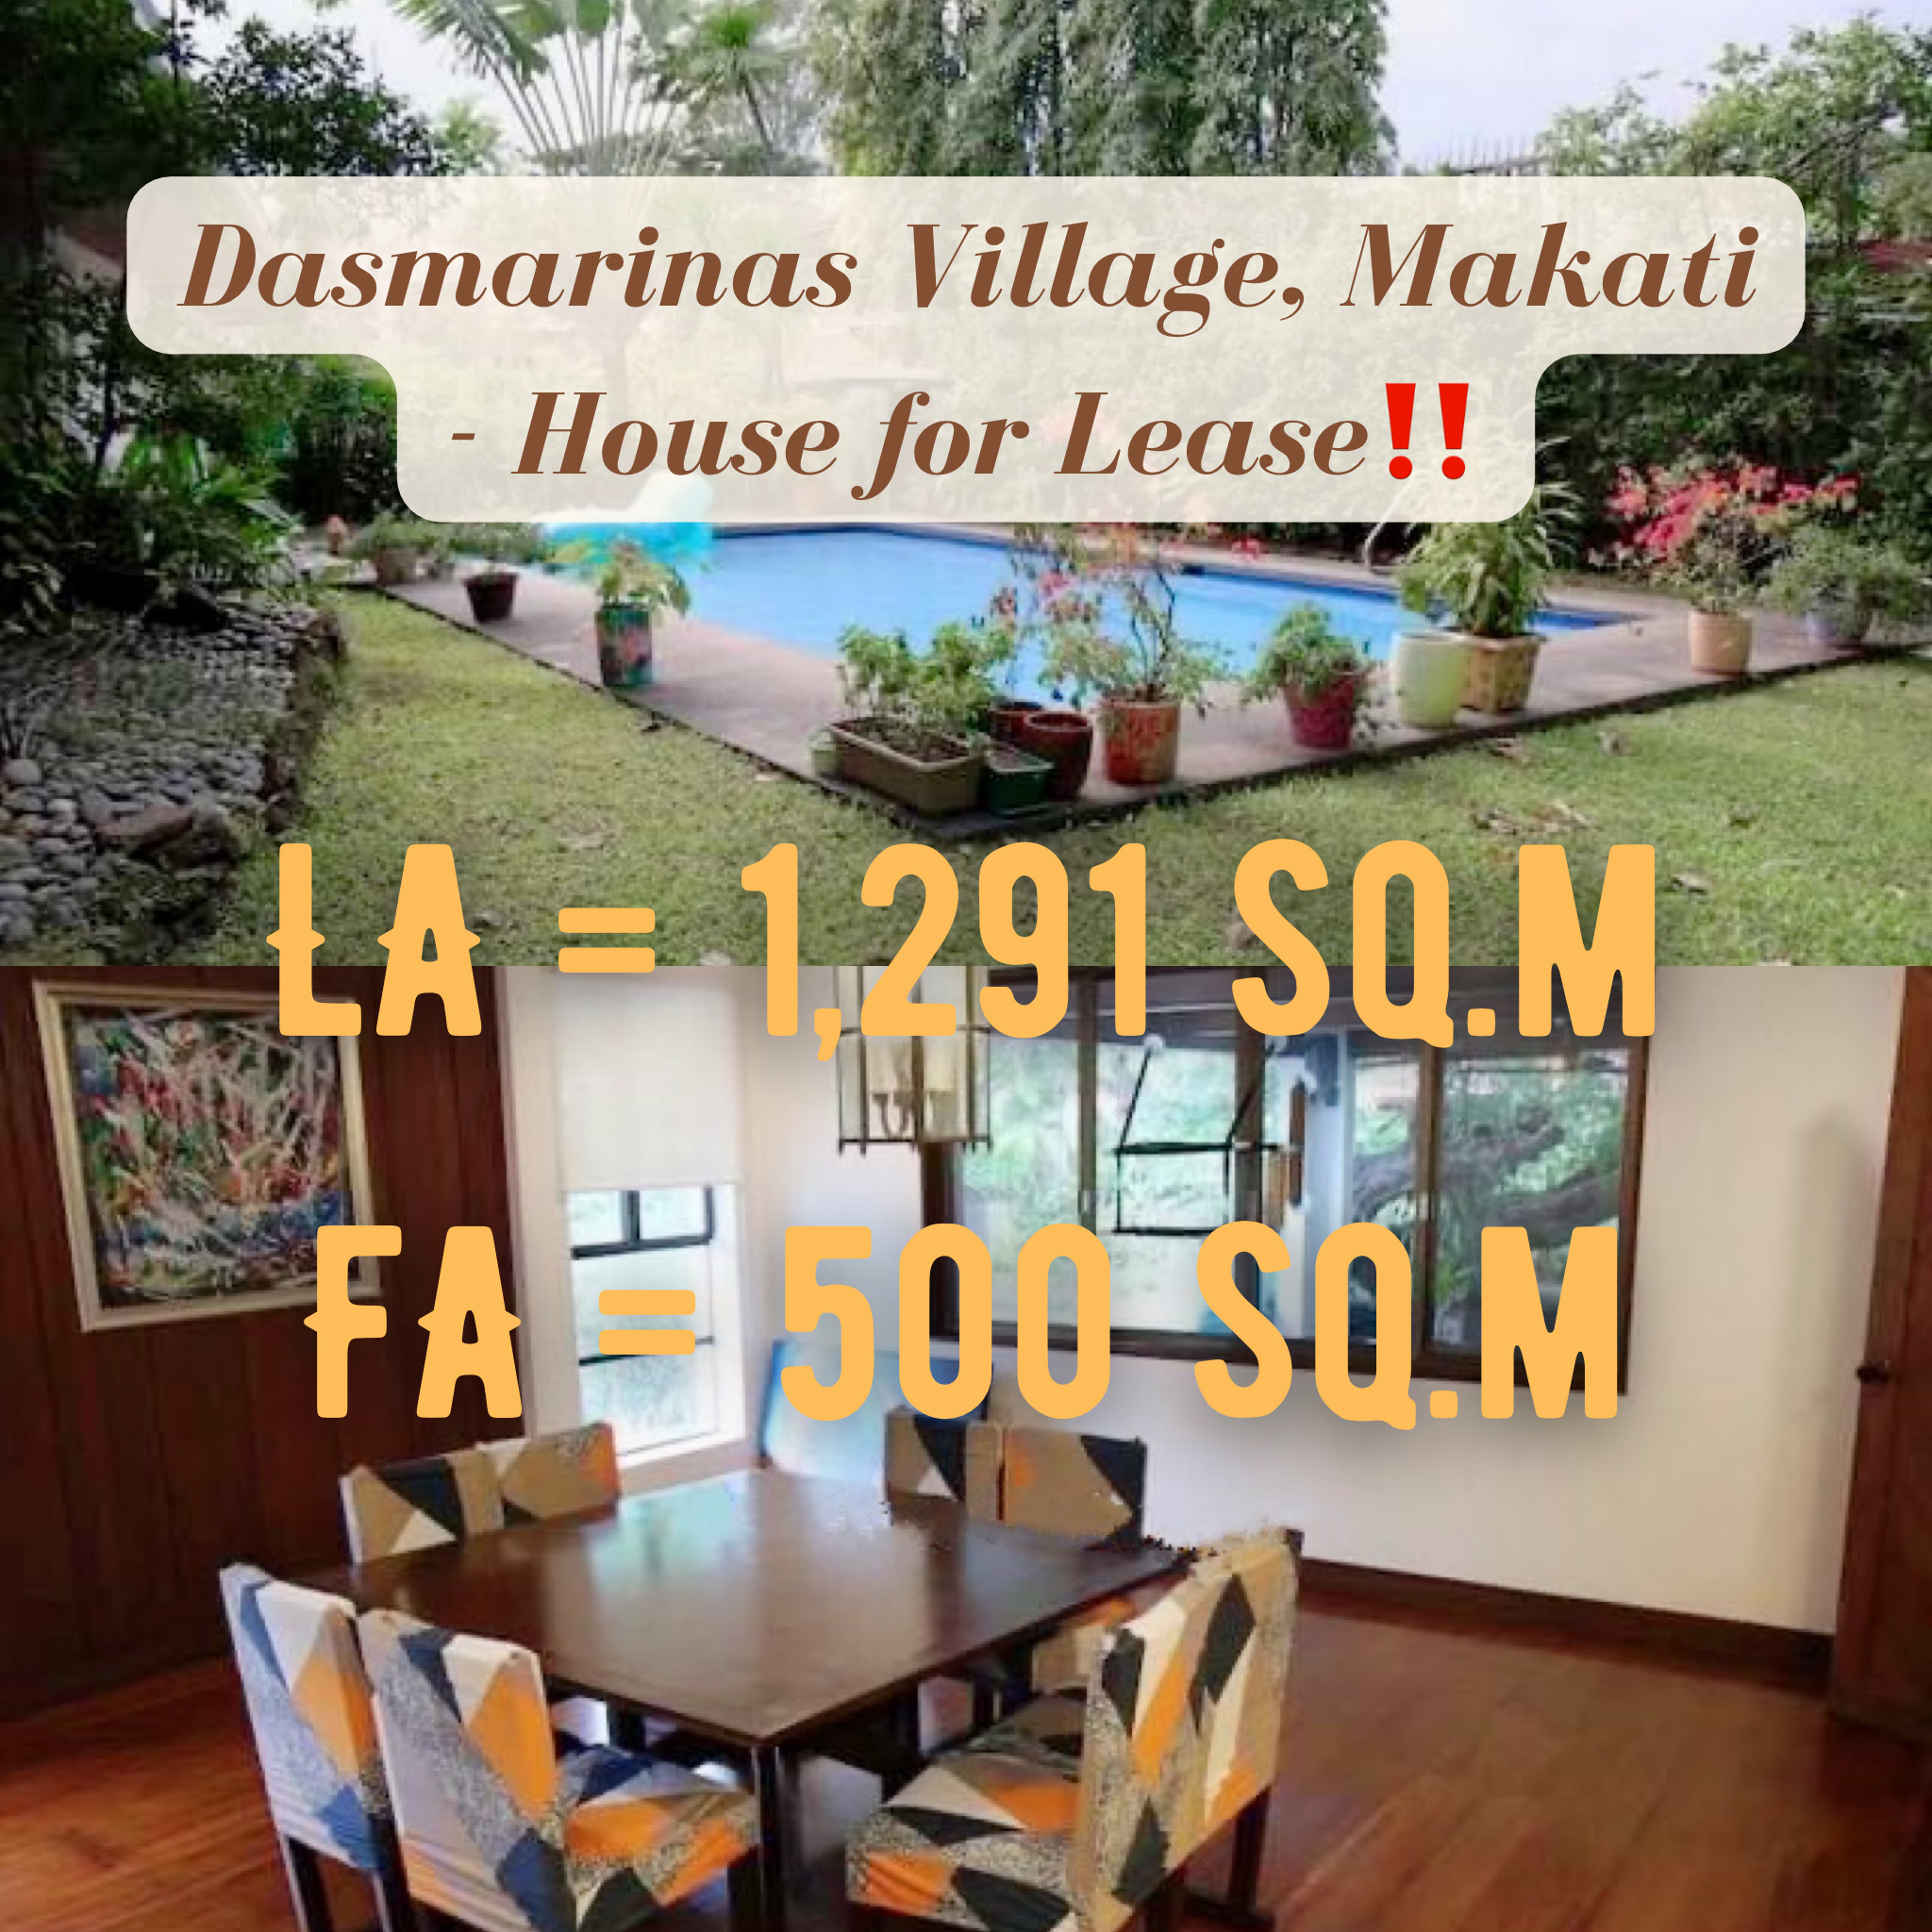 Dasmarinas Village, Makati – House for Lease‼️